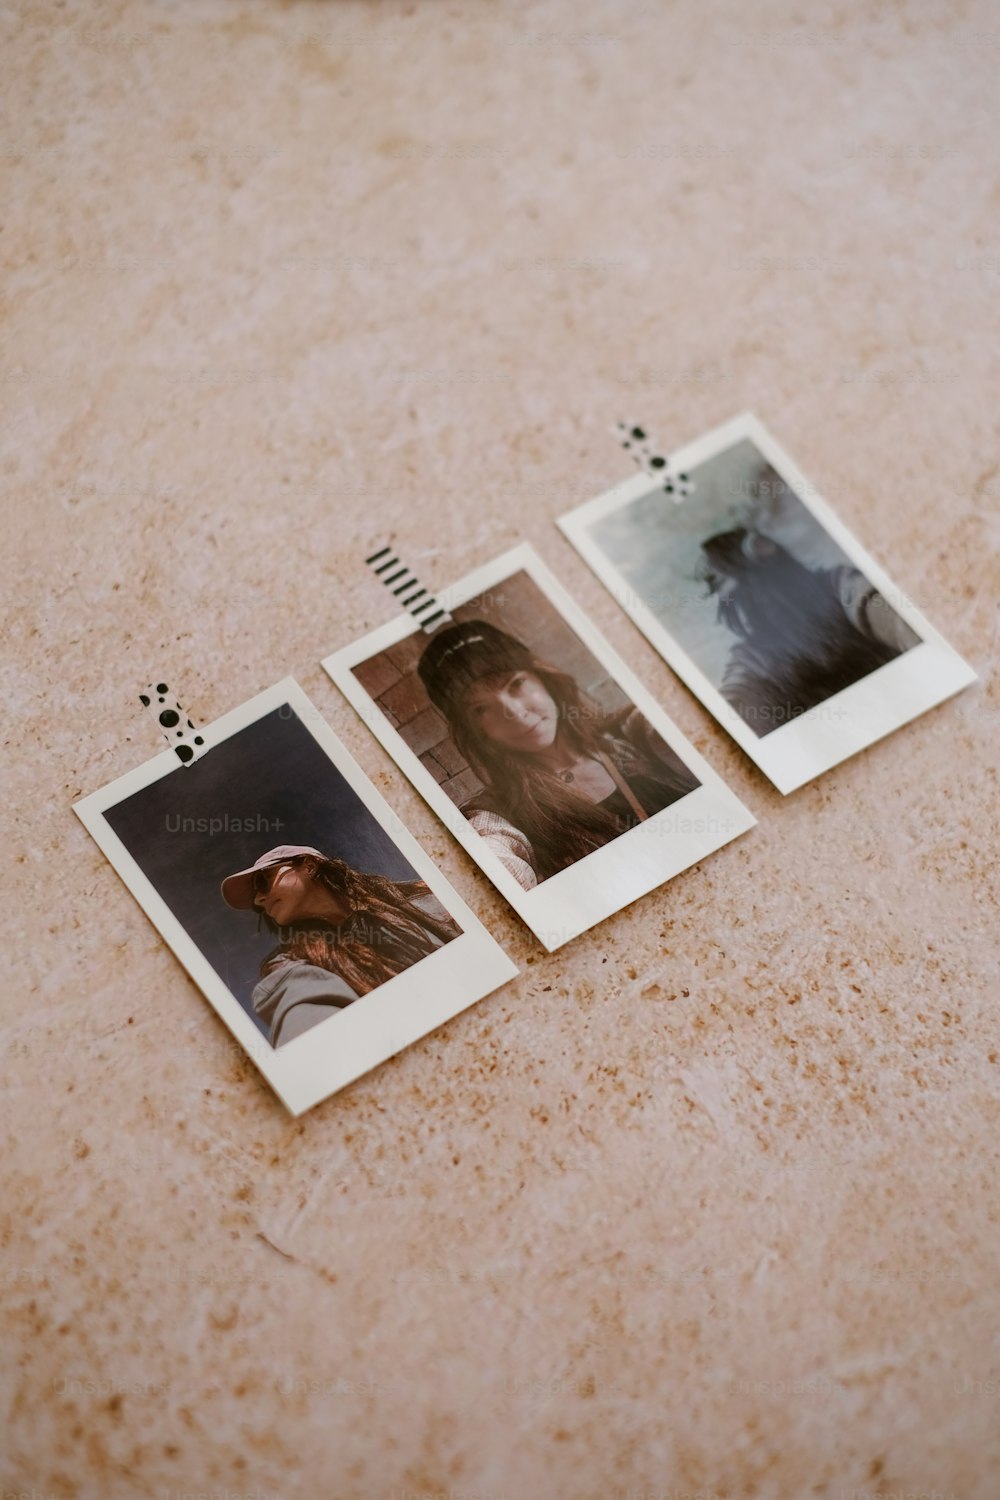 three polaroid photographs of a woman and a man